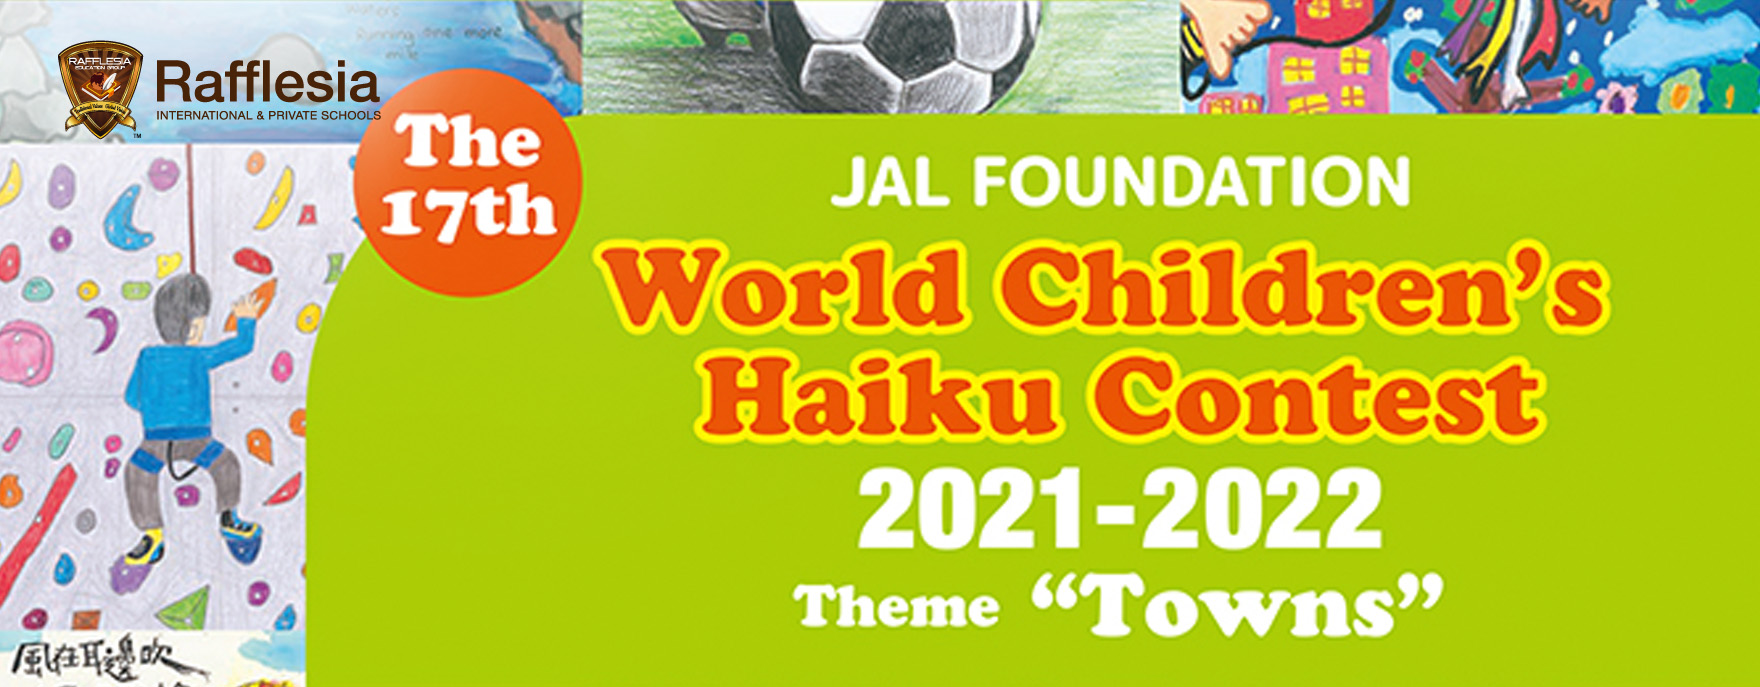 The 17th World Children's Haiku Contest